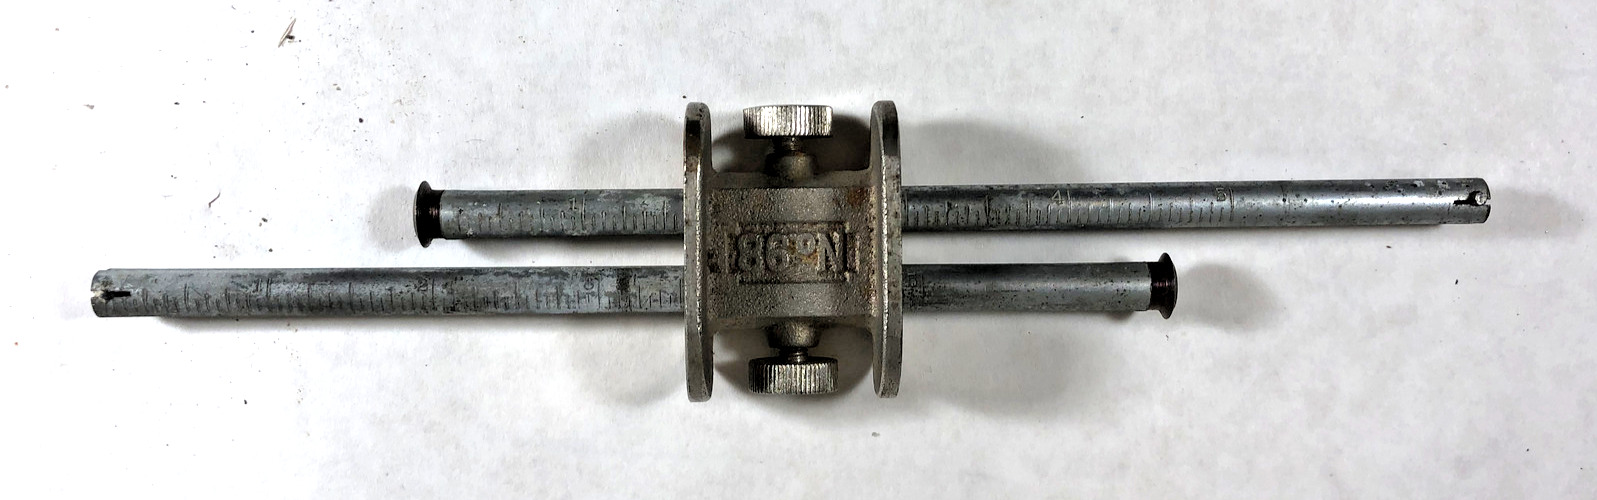 Vintage Stanley No. 98 Double Ended Mortise Marking Gauge